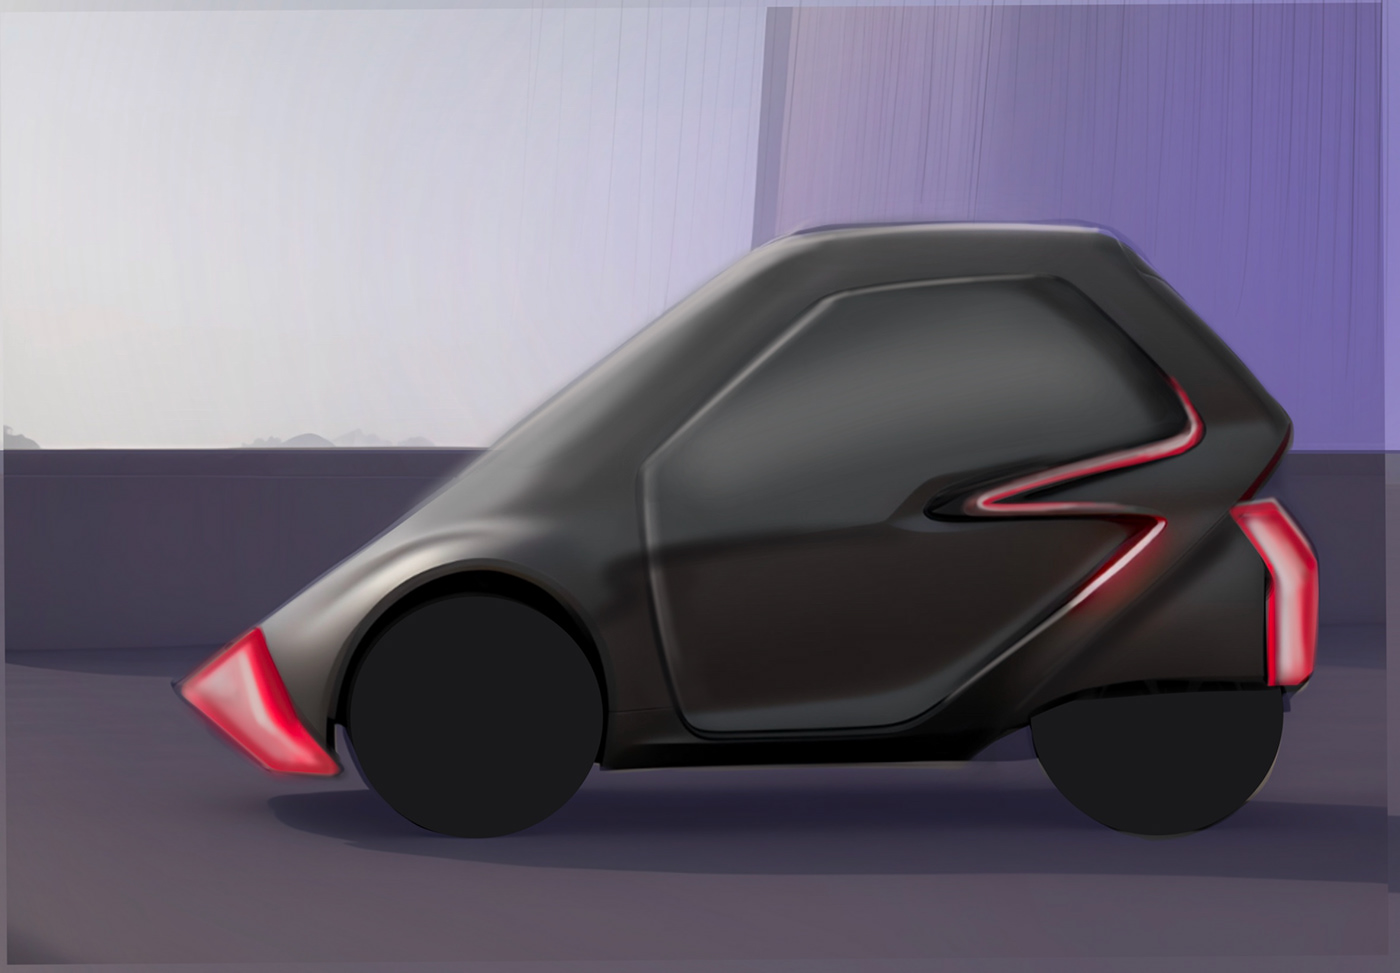 Transportation Design 2 Seater vehicle concept vehicle Automotive design industrial design  automotive  